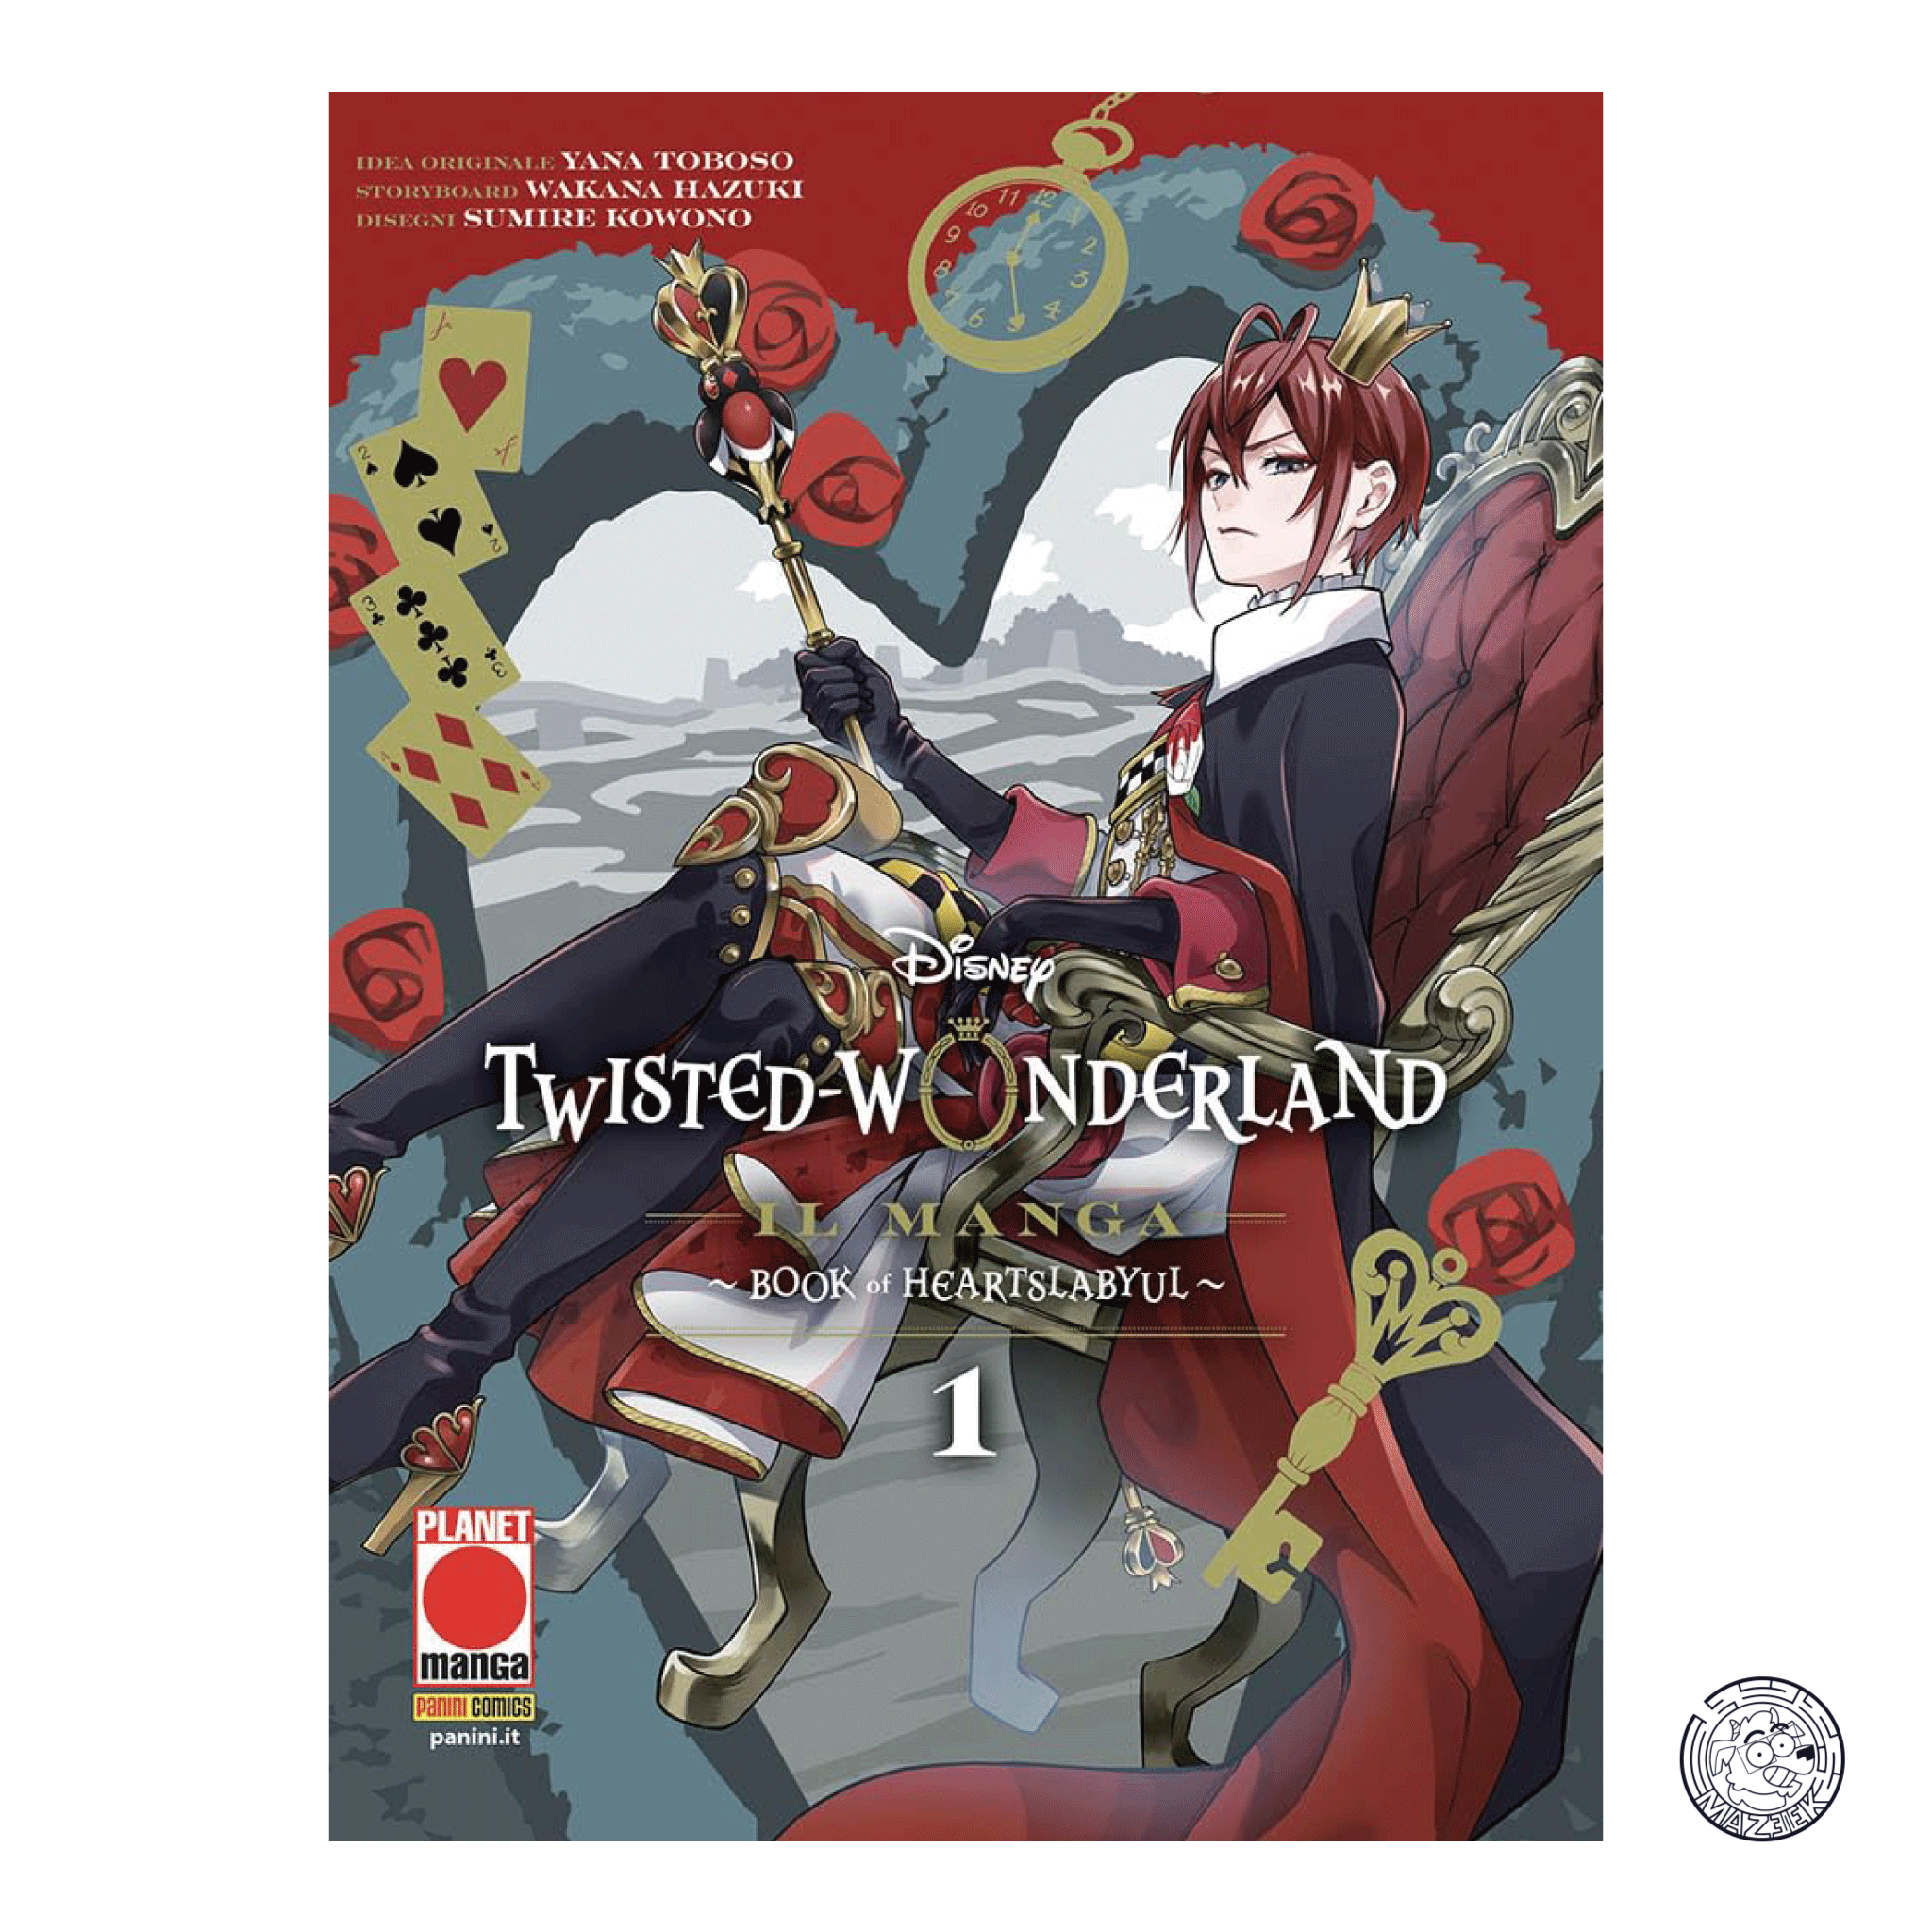 Twisted-Wonderland, Il Manga: Book of Heartlabyul 01